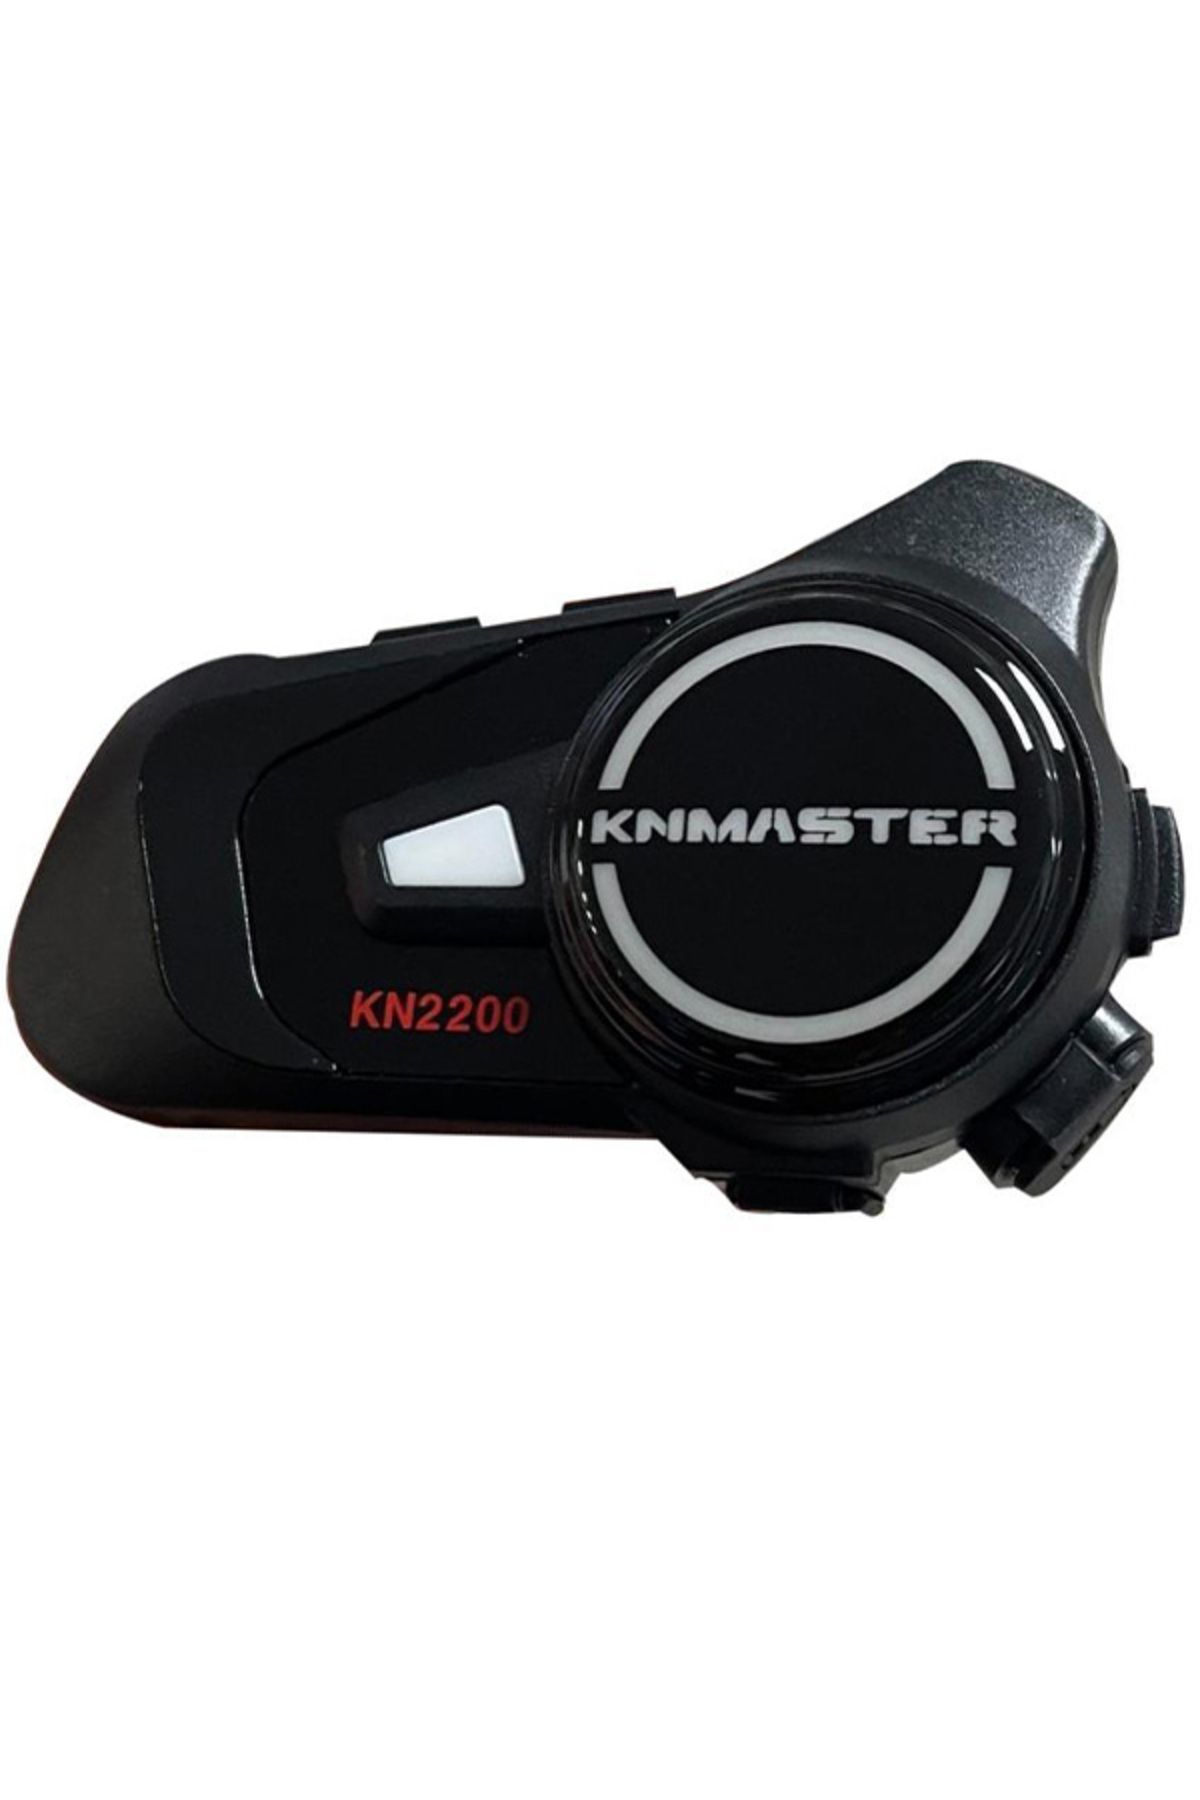 Knmaster Kn2200 Motosiklet Kask Interkom Bluetooth Intercom Kulaklık Seti Siyah